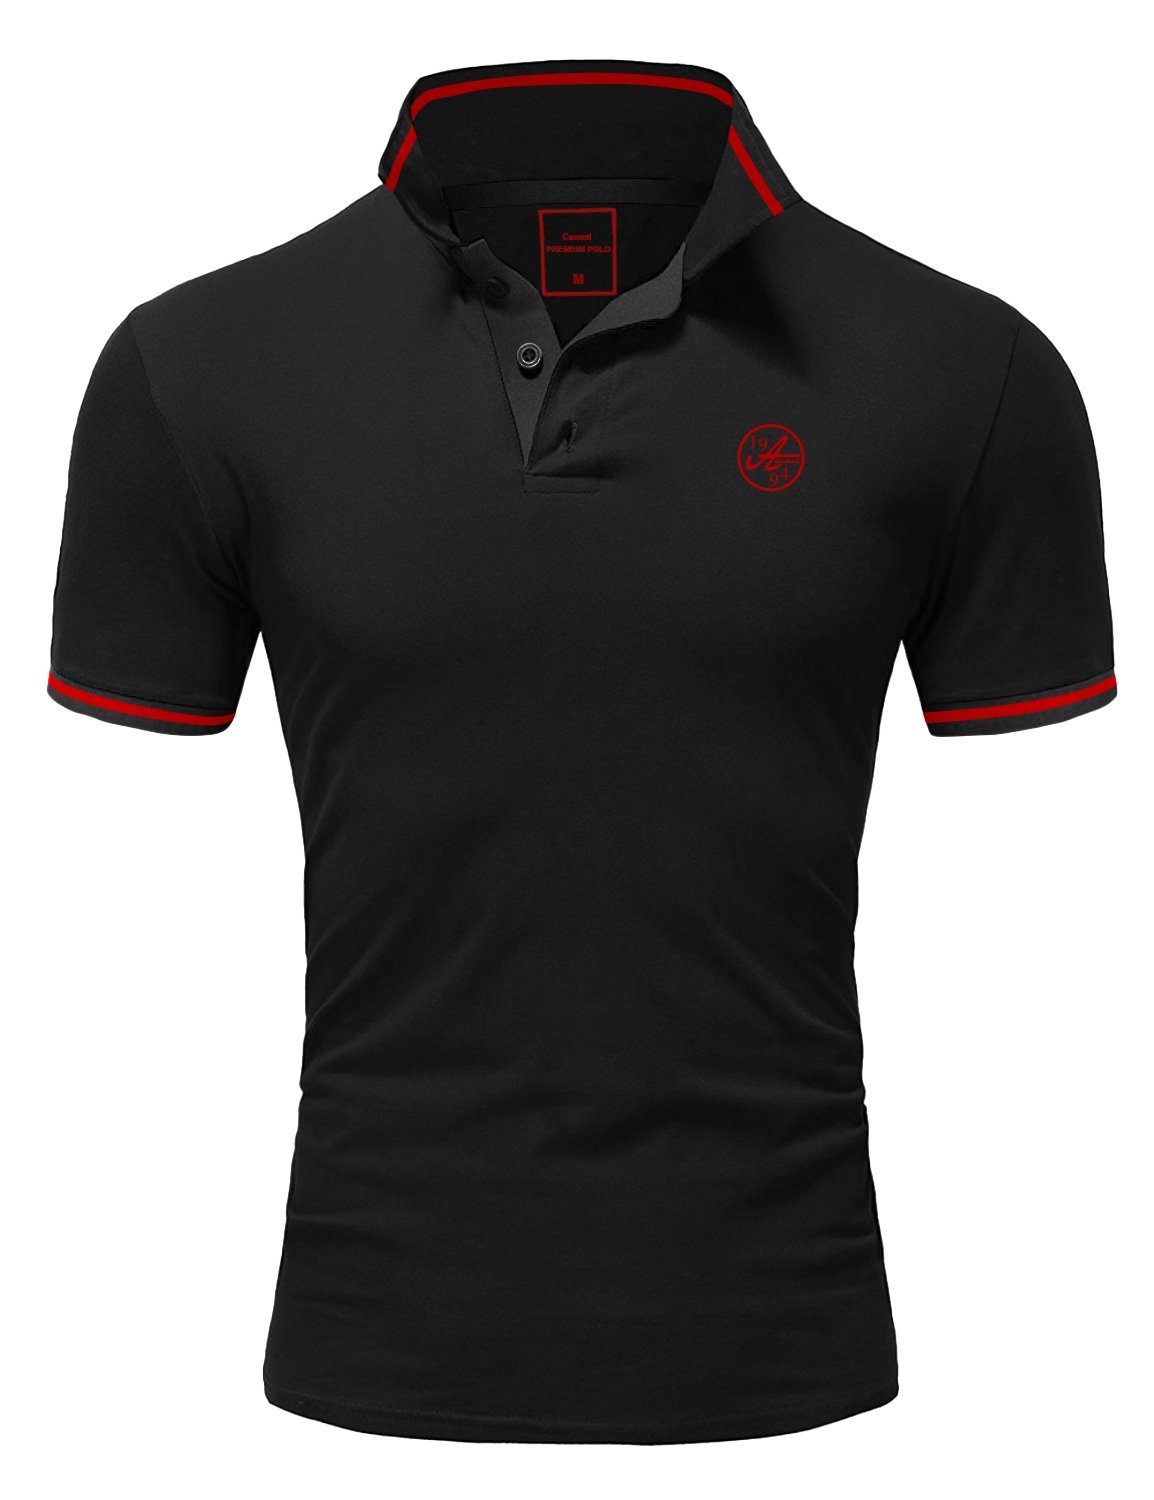 Amaci&Sons Poloshirt MACON Herren Basic Kontrast Stickerei Kurzarm Polohemd T-Shirt Schwarz/Rot